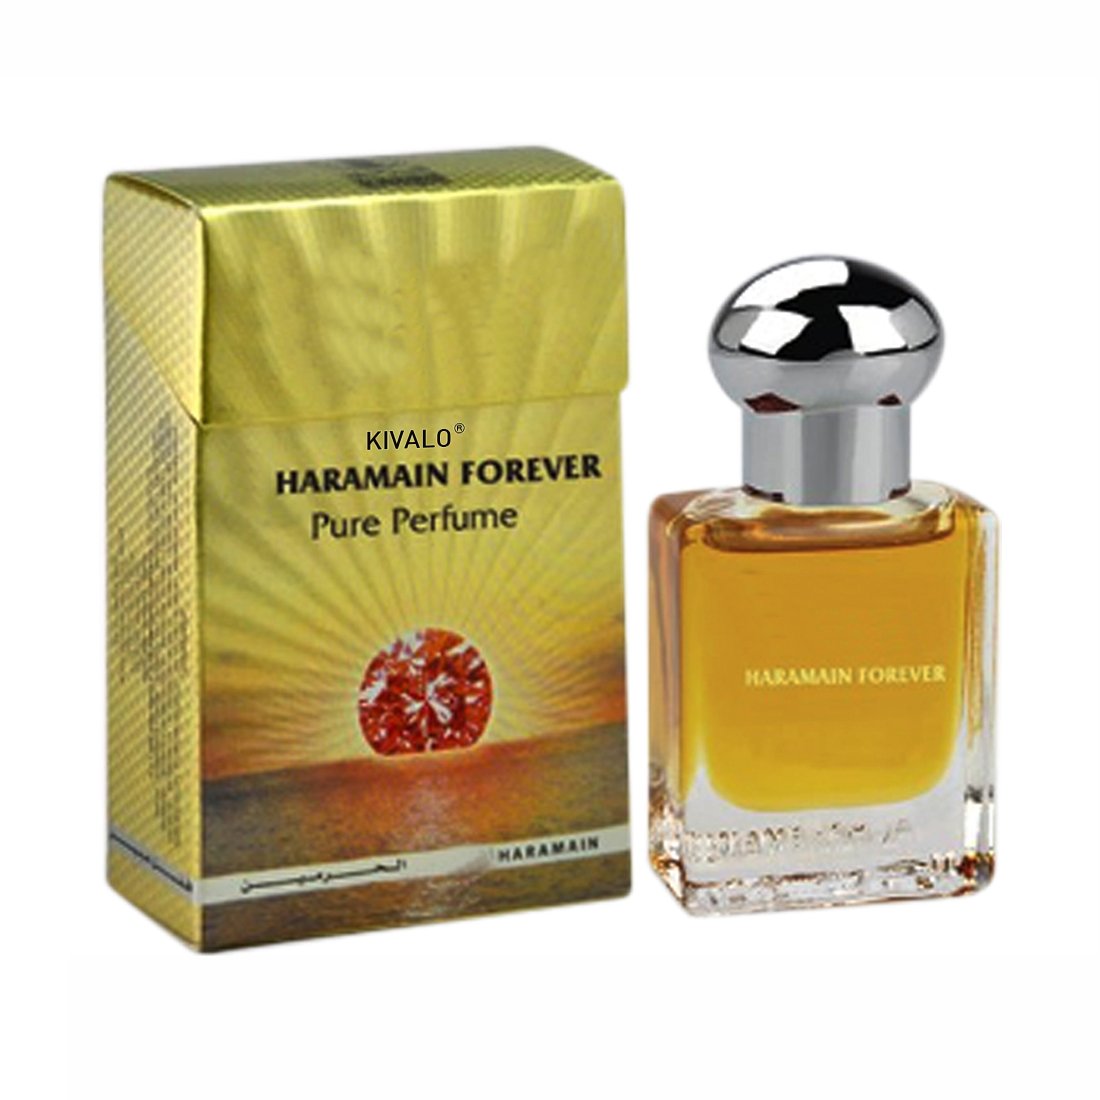 Al Haramain Oudi & Forever Fragrance Pure Original Roll on Perfume Oil Pack of 2 (Attar) - 2 x 15 ml